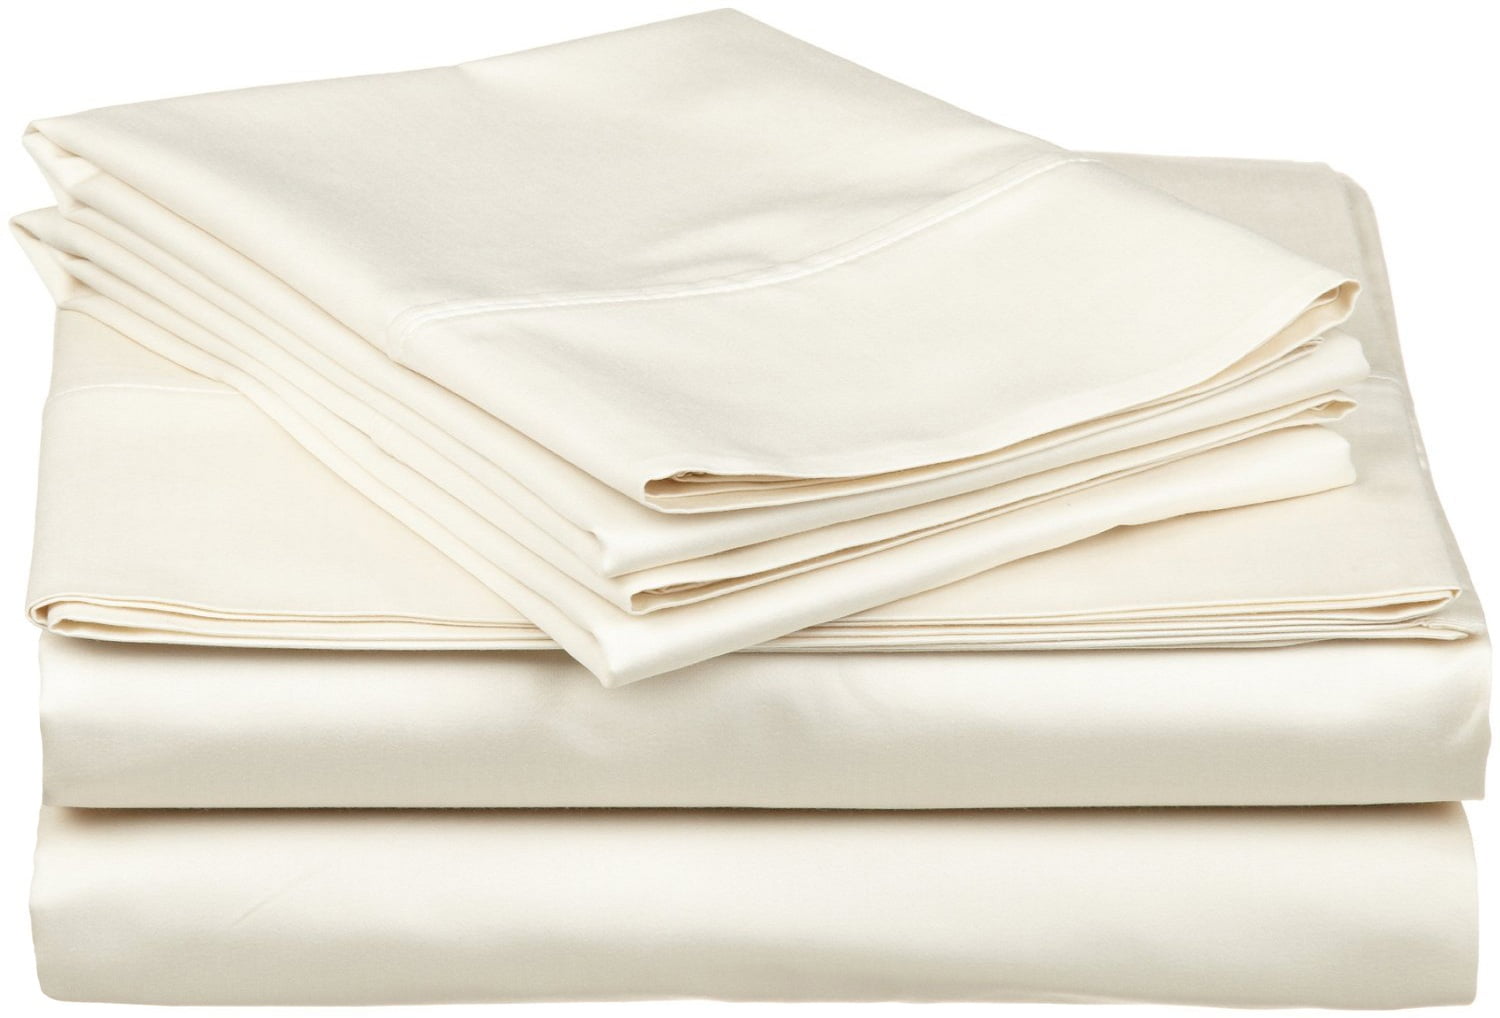 Top Class Egyptian Cotton Select Sheet Set Deep Pocket US Sizes Ivory Striped 